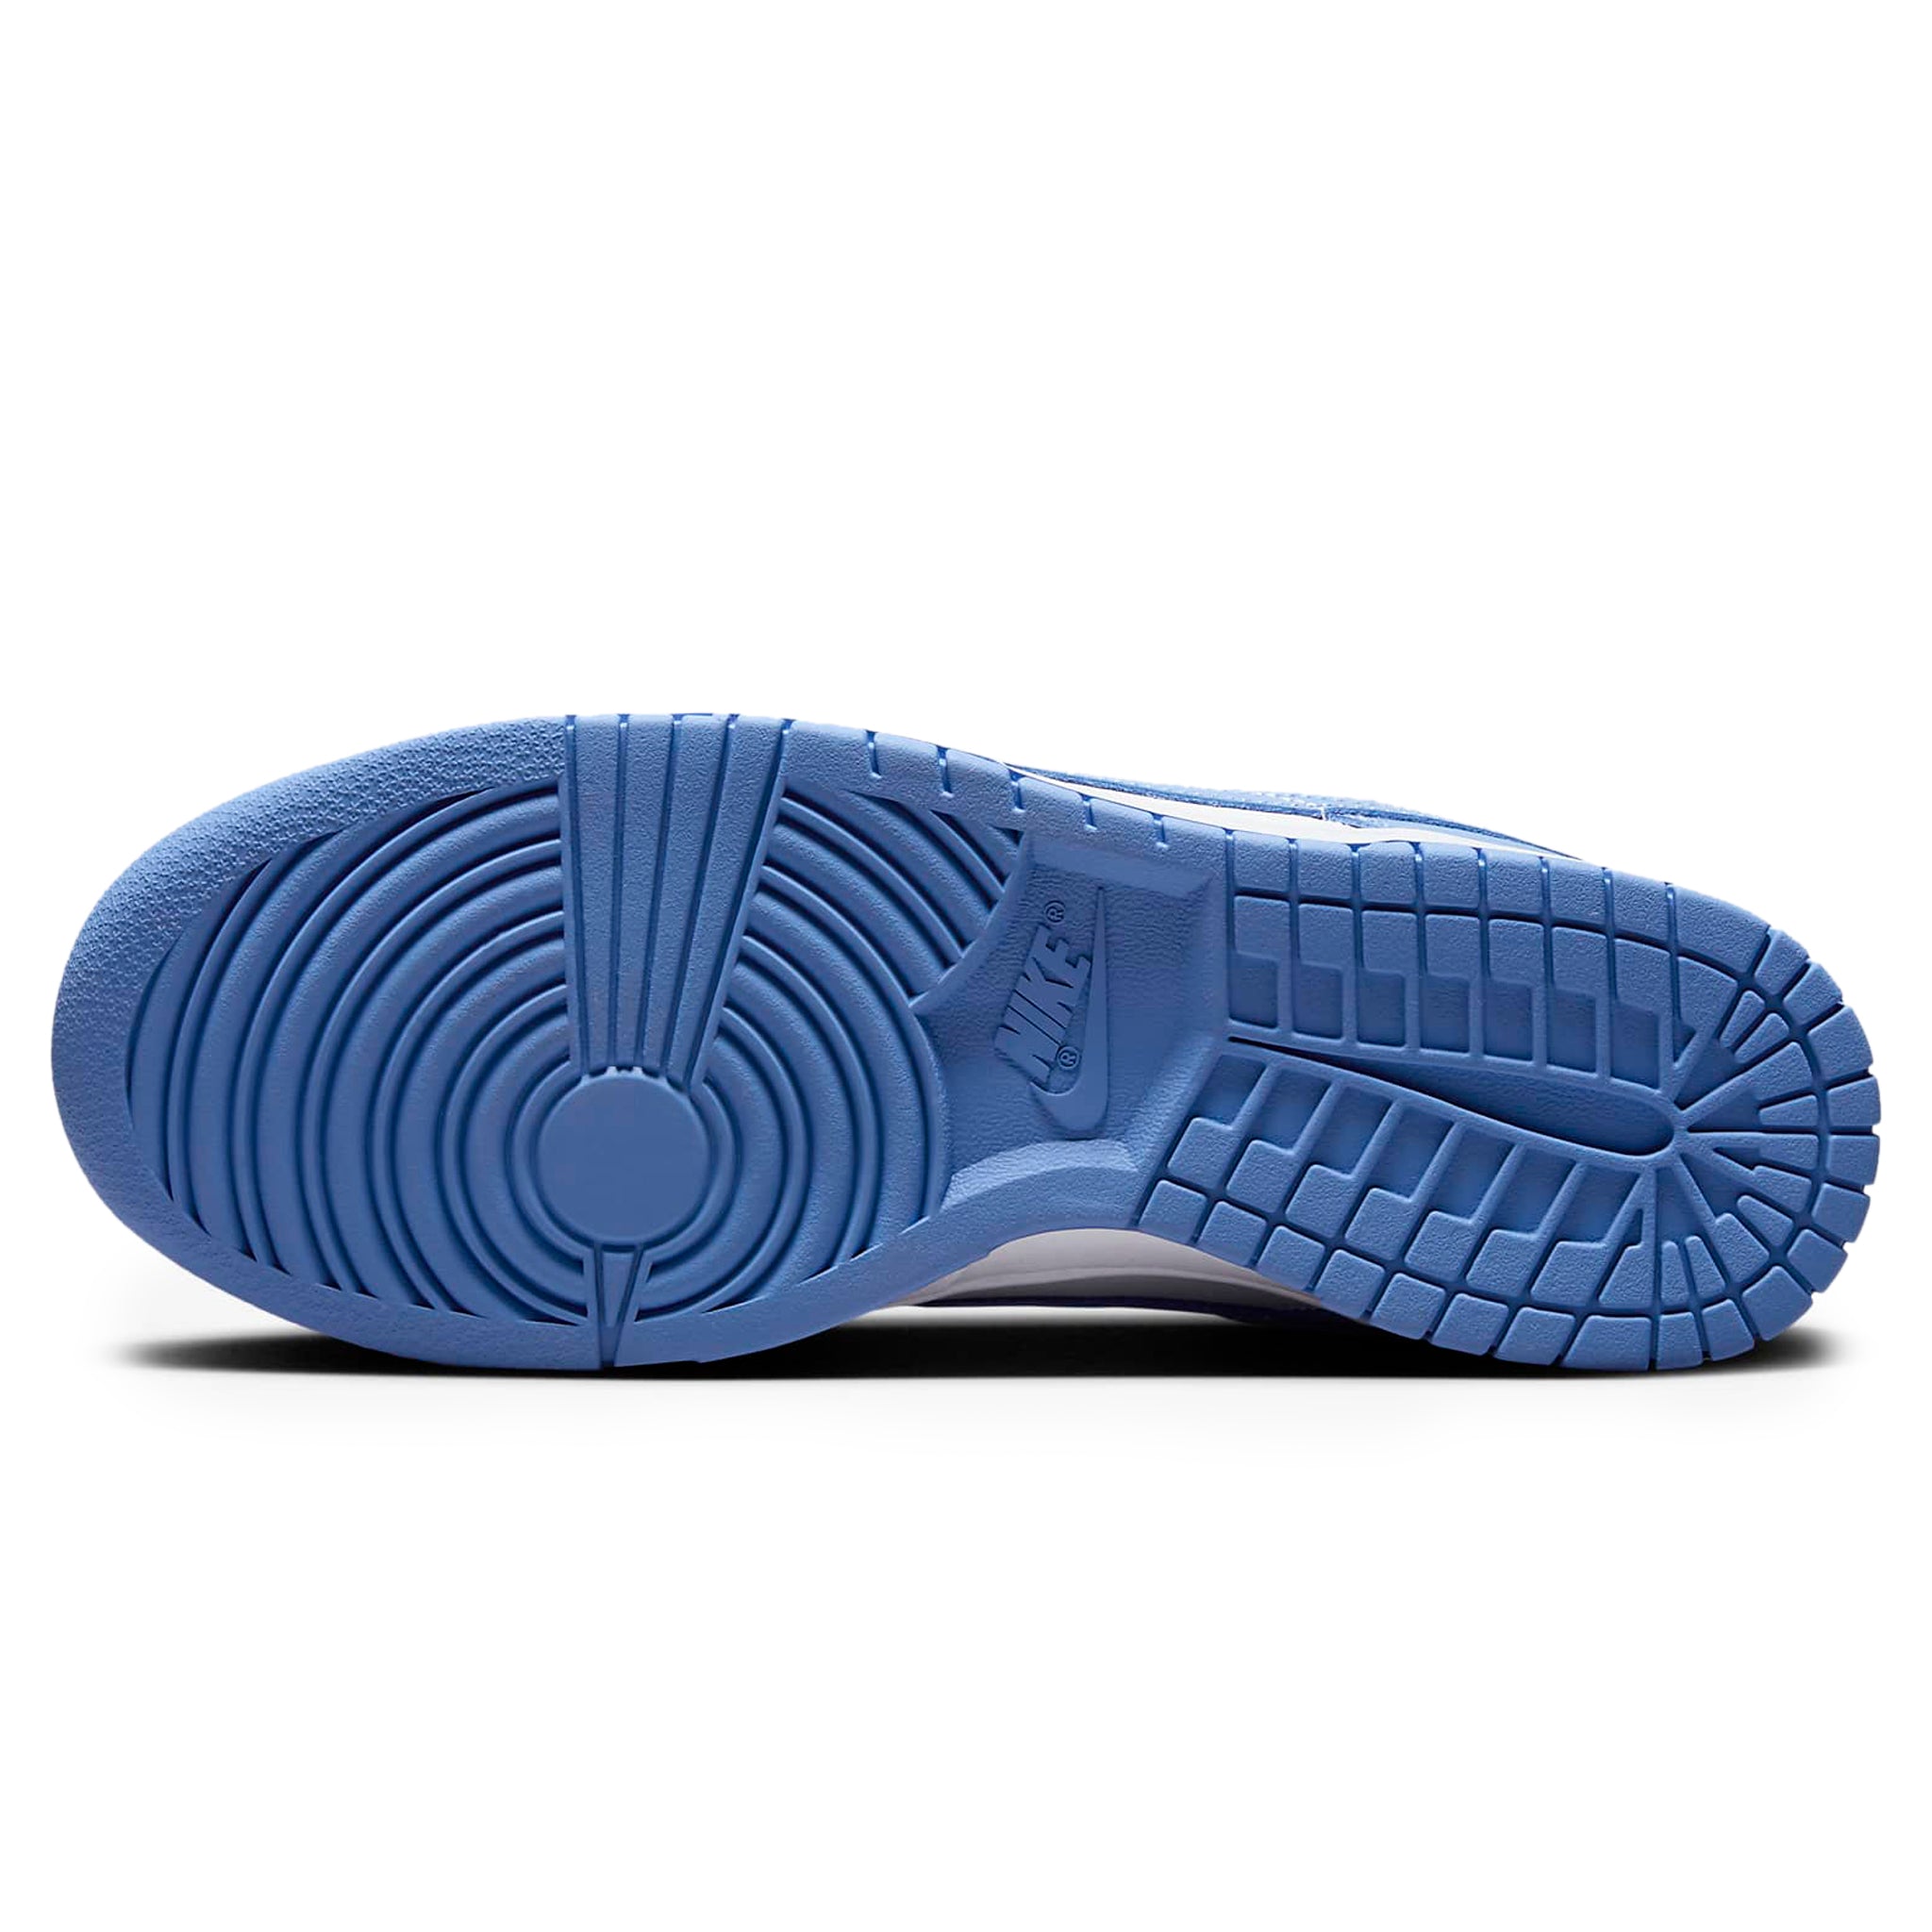 Sole view of Nike Dunk Low Polar Blue DV0833-400